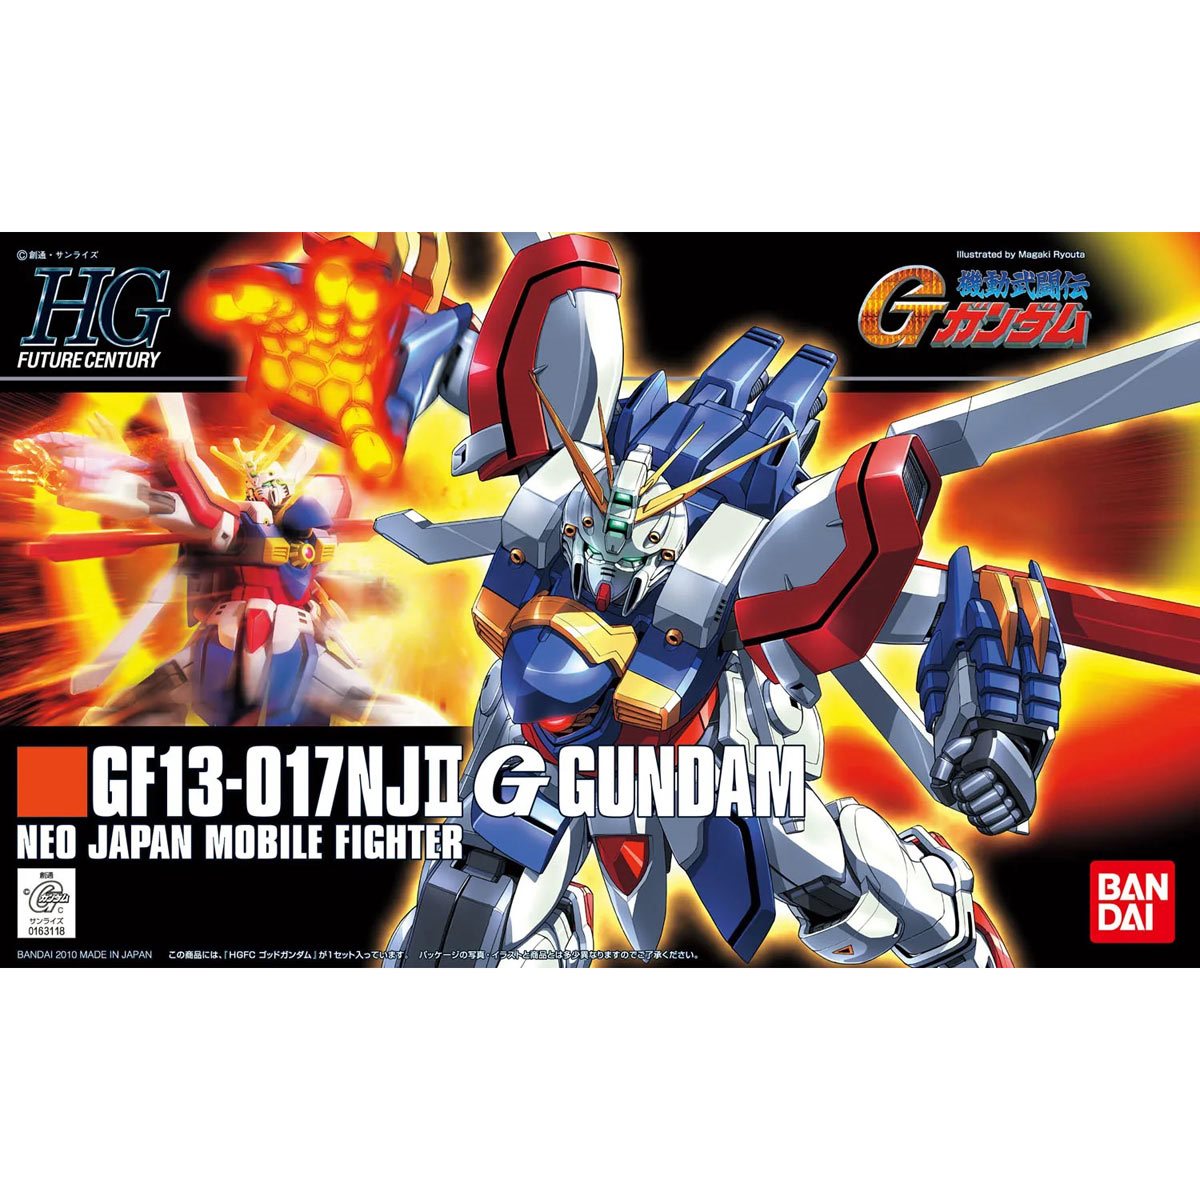 Bandai Hobby Gunpla High Grade Model Kit: Mobile Fighter G Gundam - God Gundam Escala 1/144